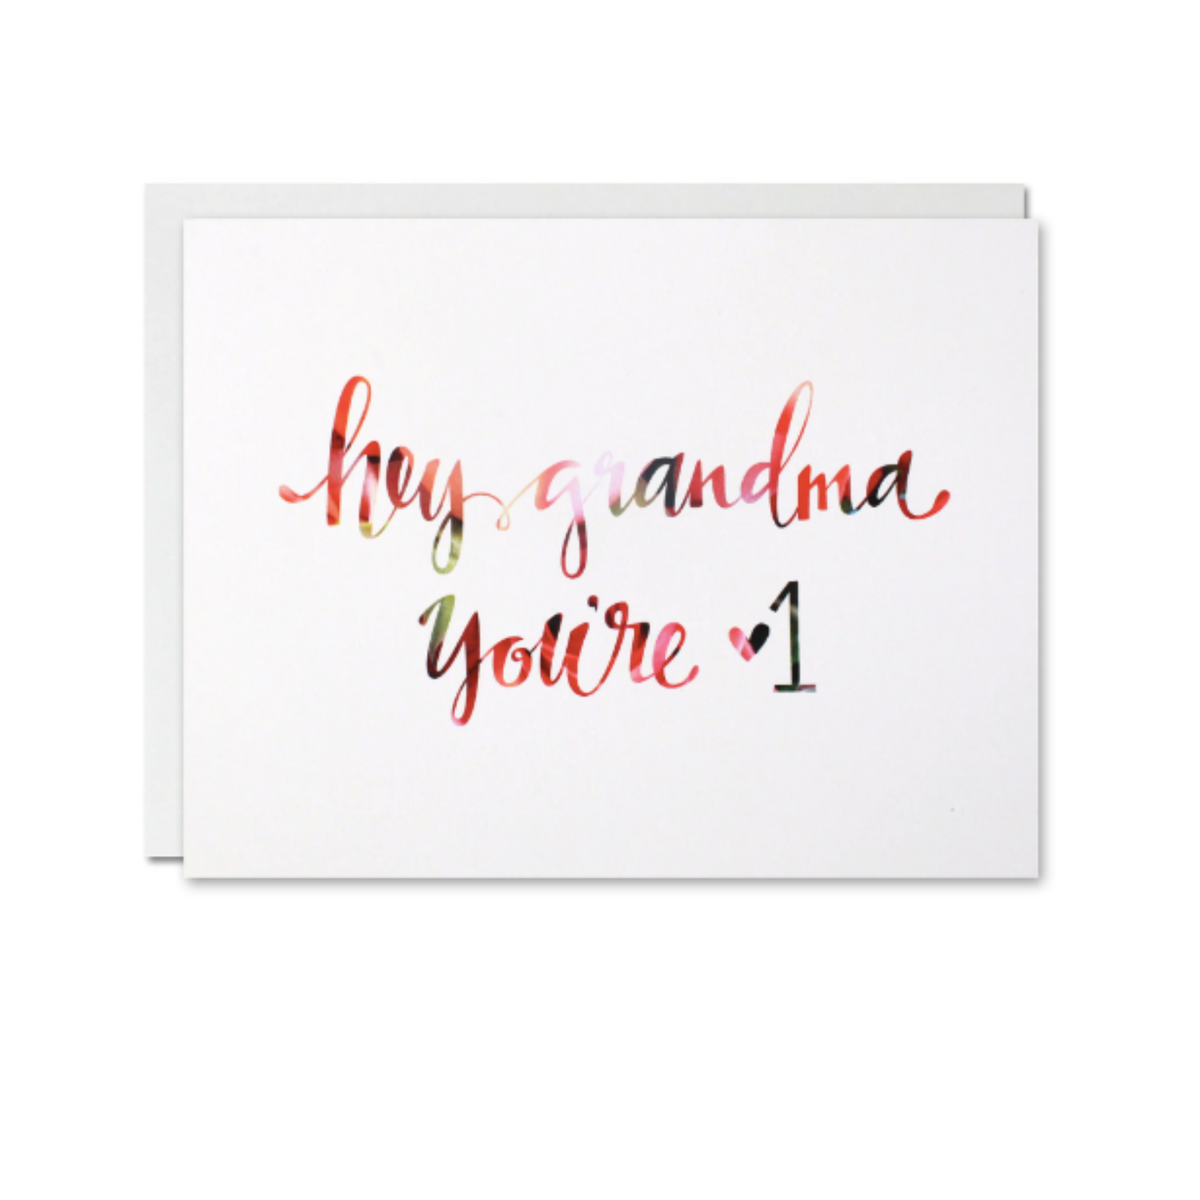 Hey Grandma Card